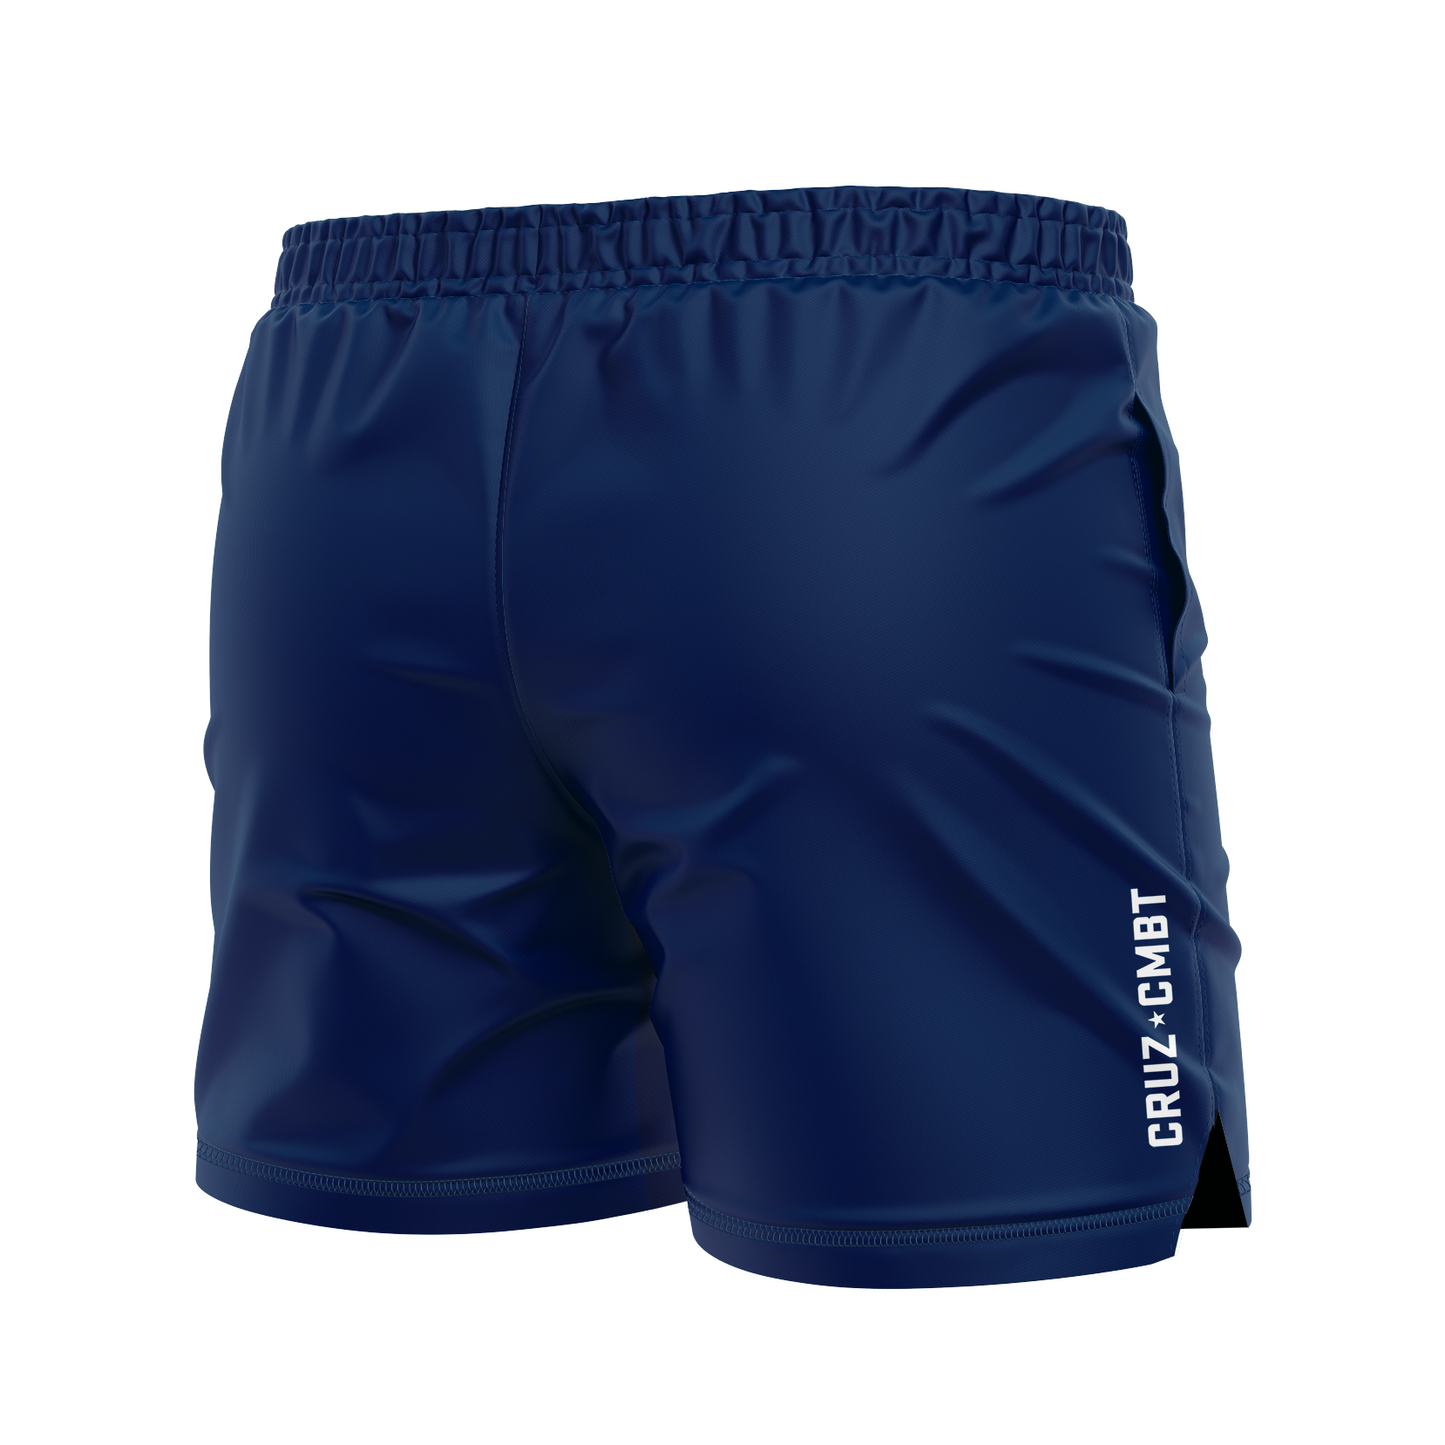 Base Collection men's FC shorts, navy